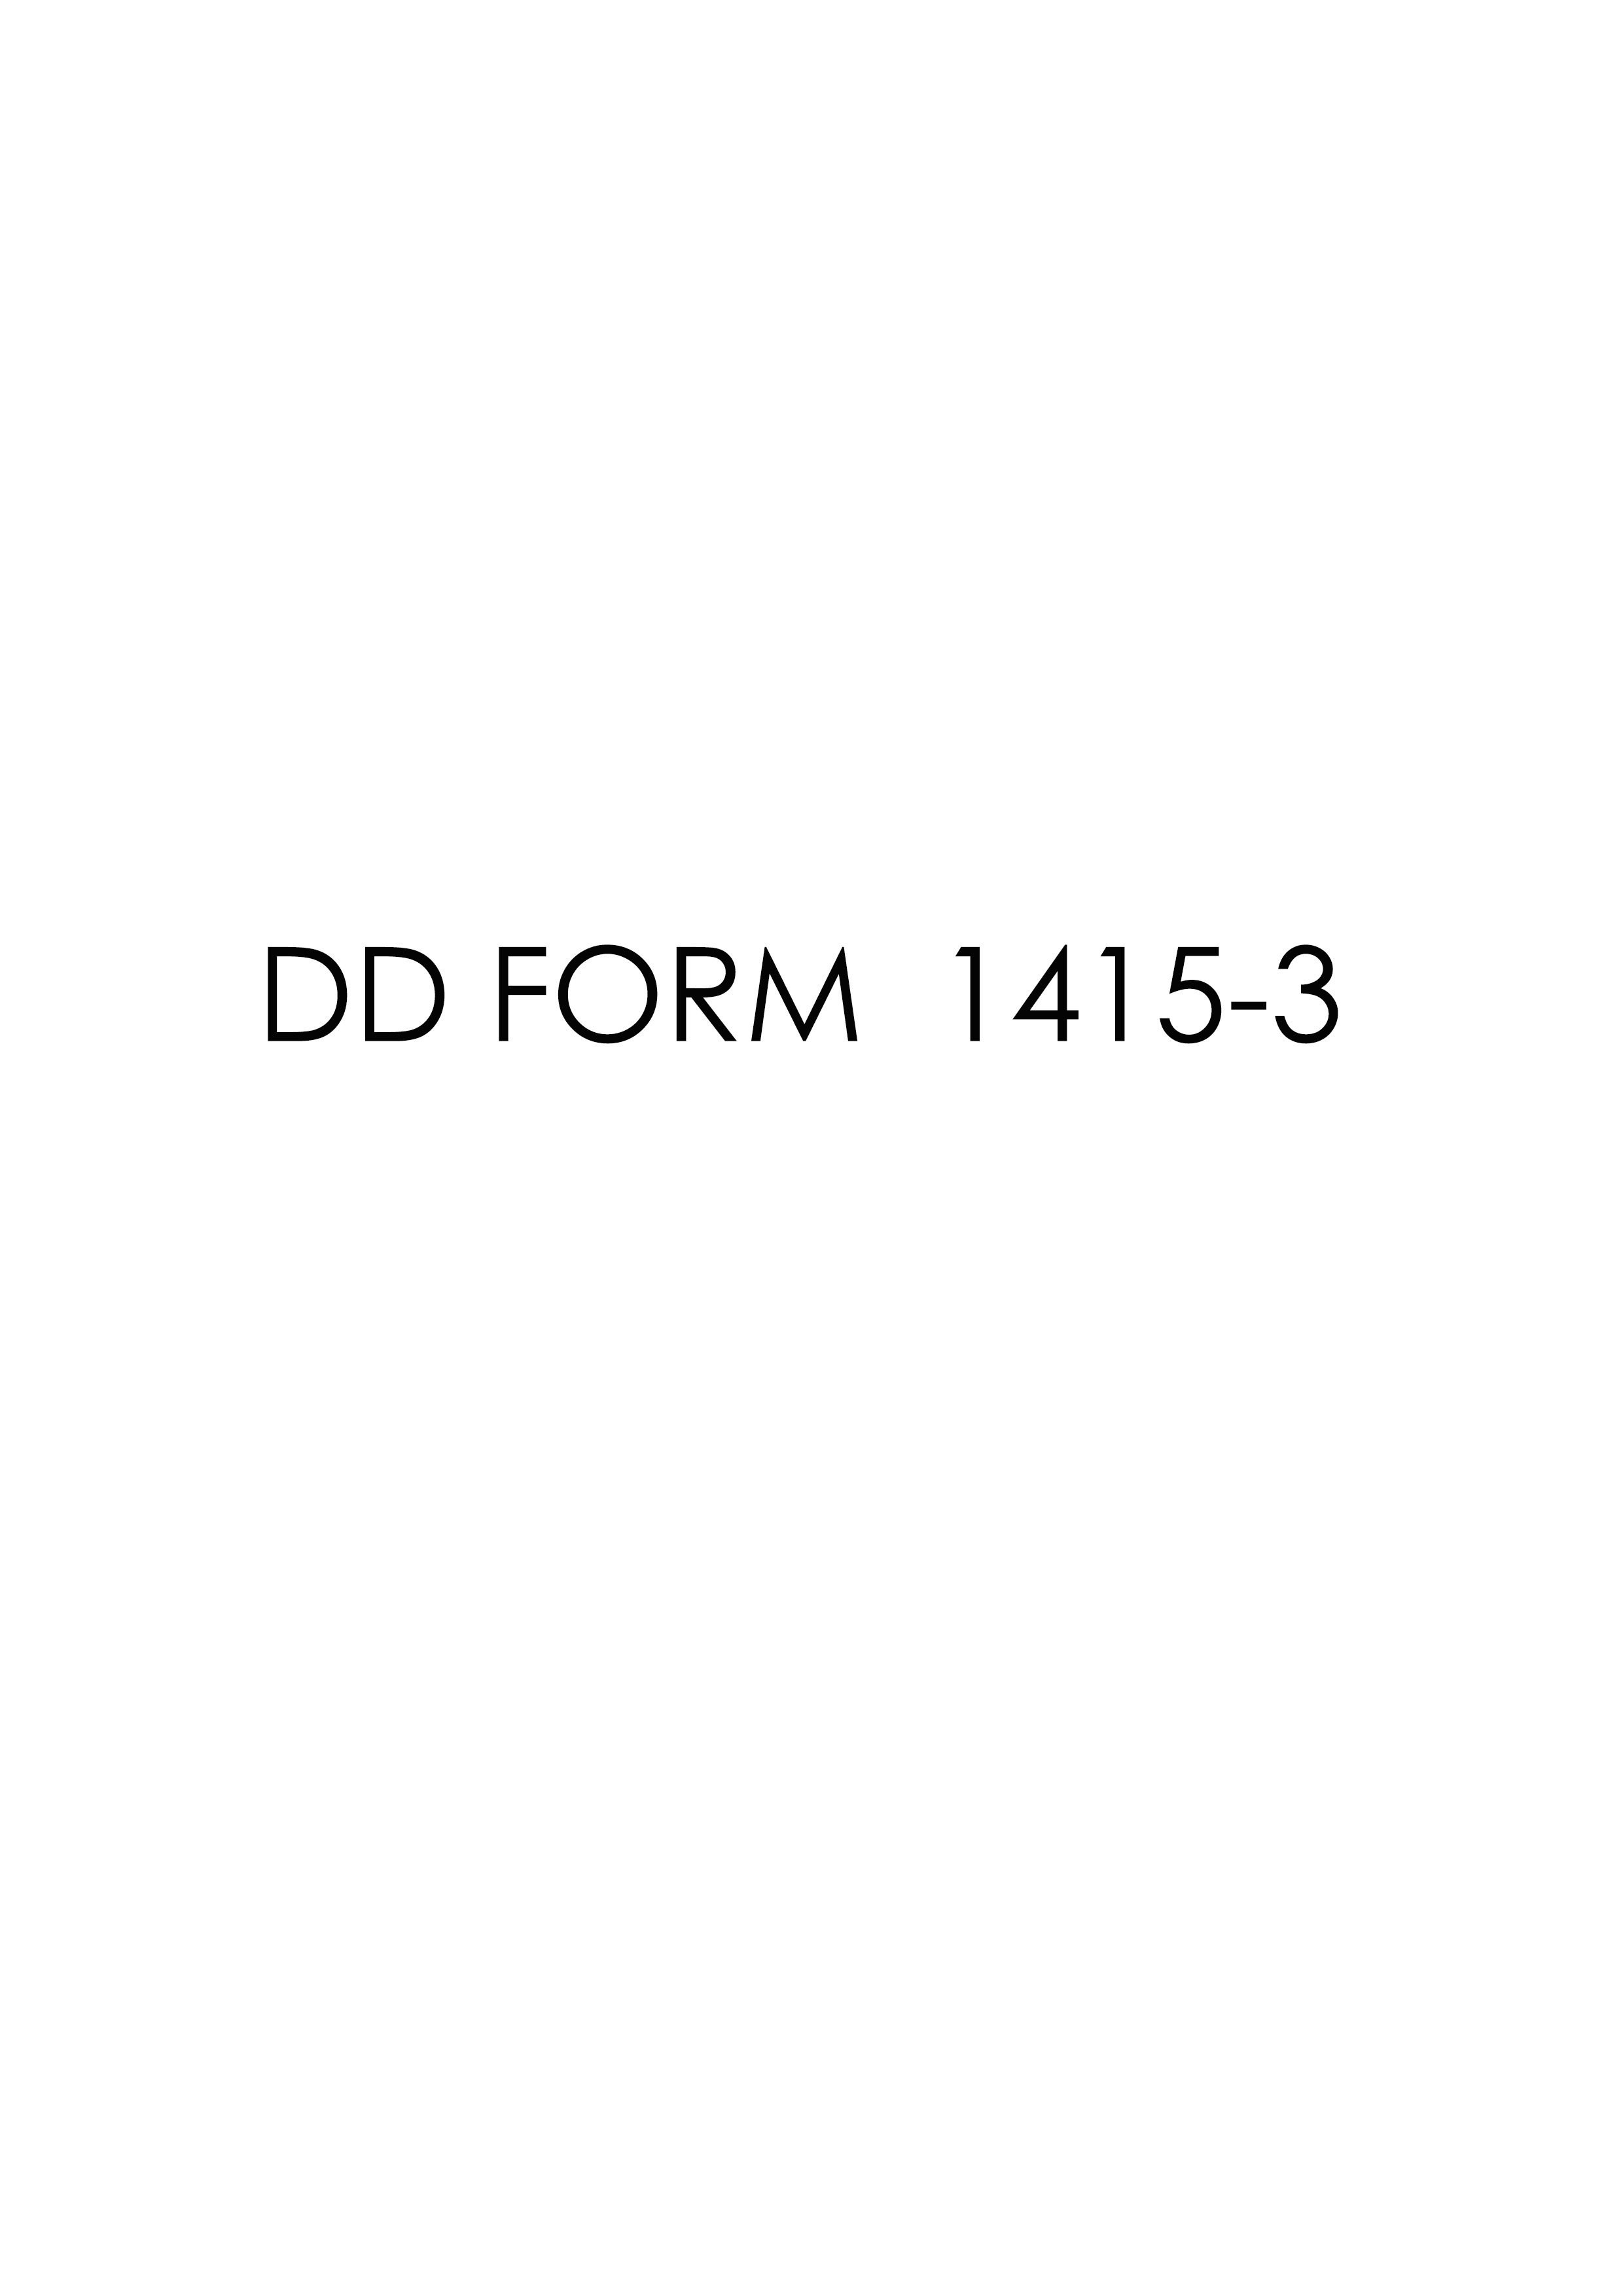 Download dd 1415-3 Form